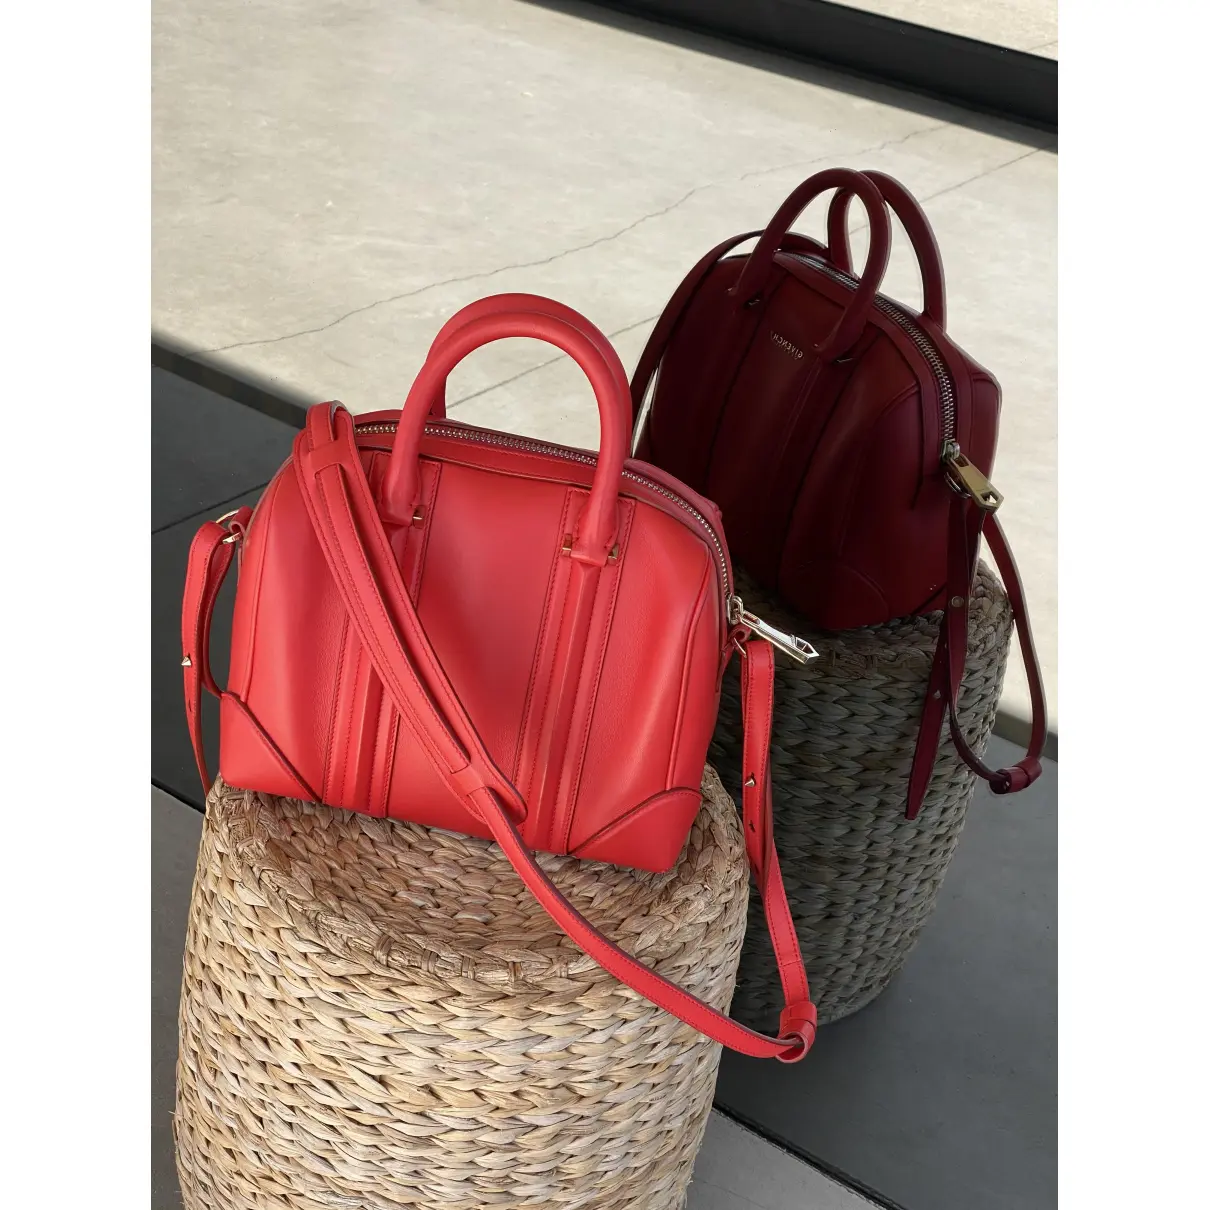 Buy Givenchy Lucrezia leather handbag online